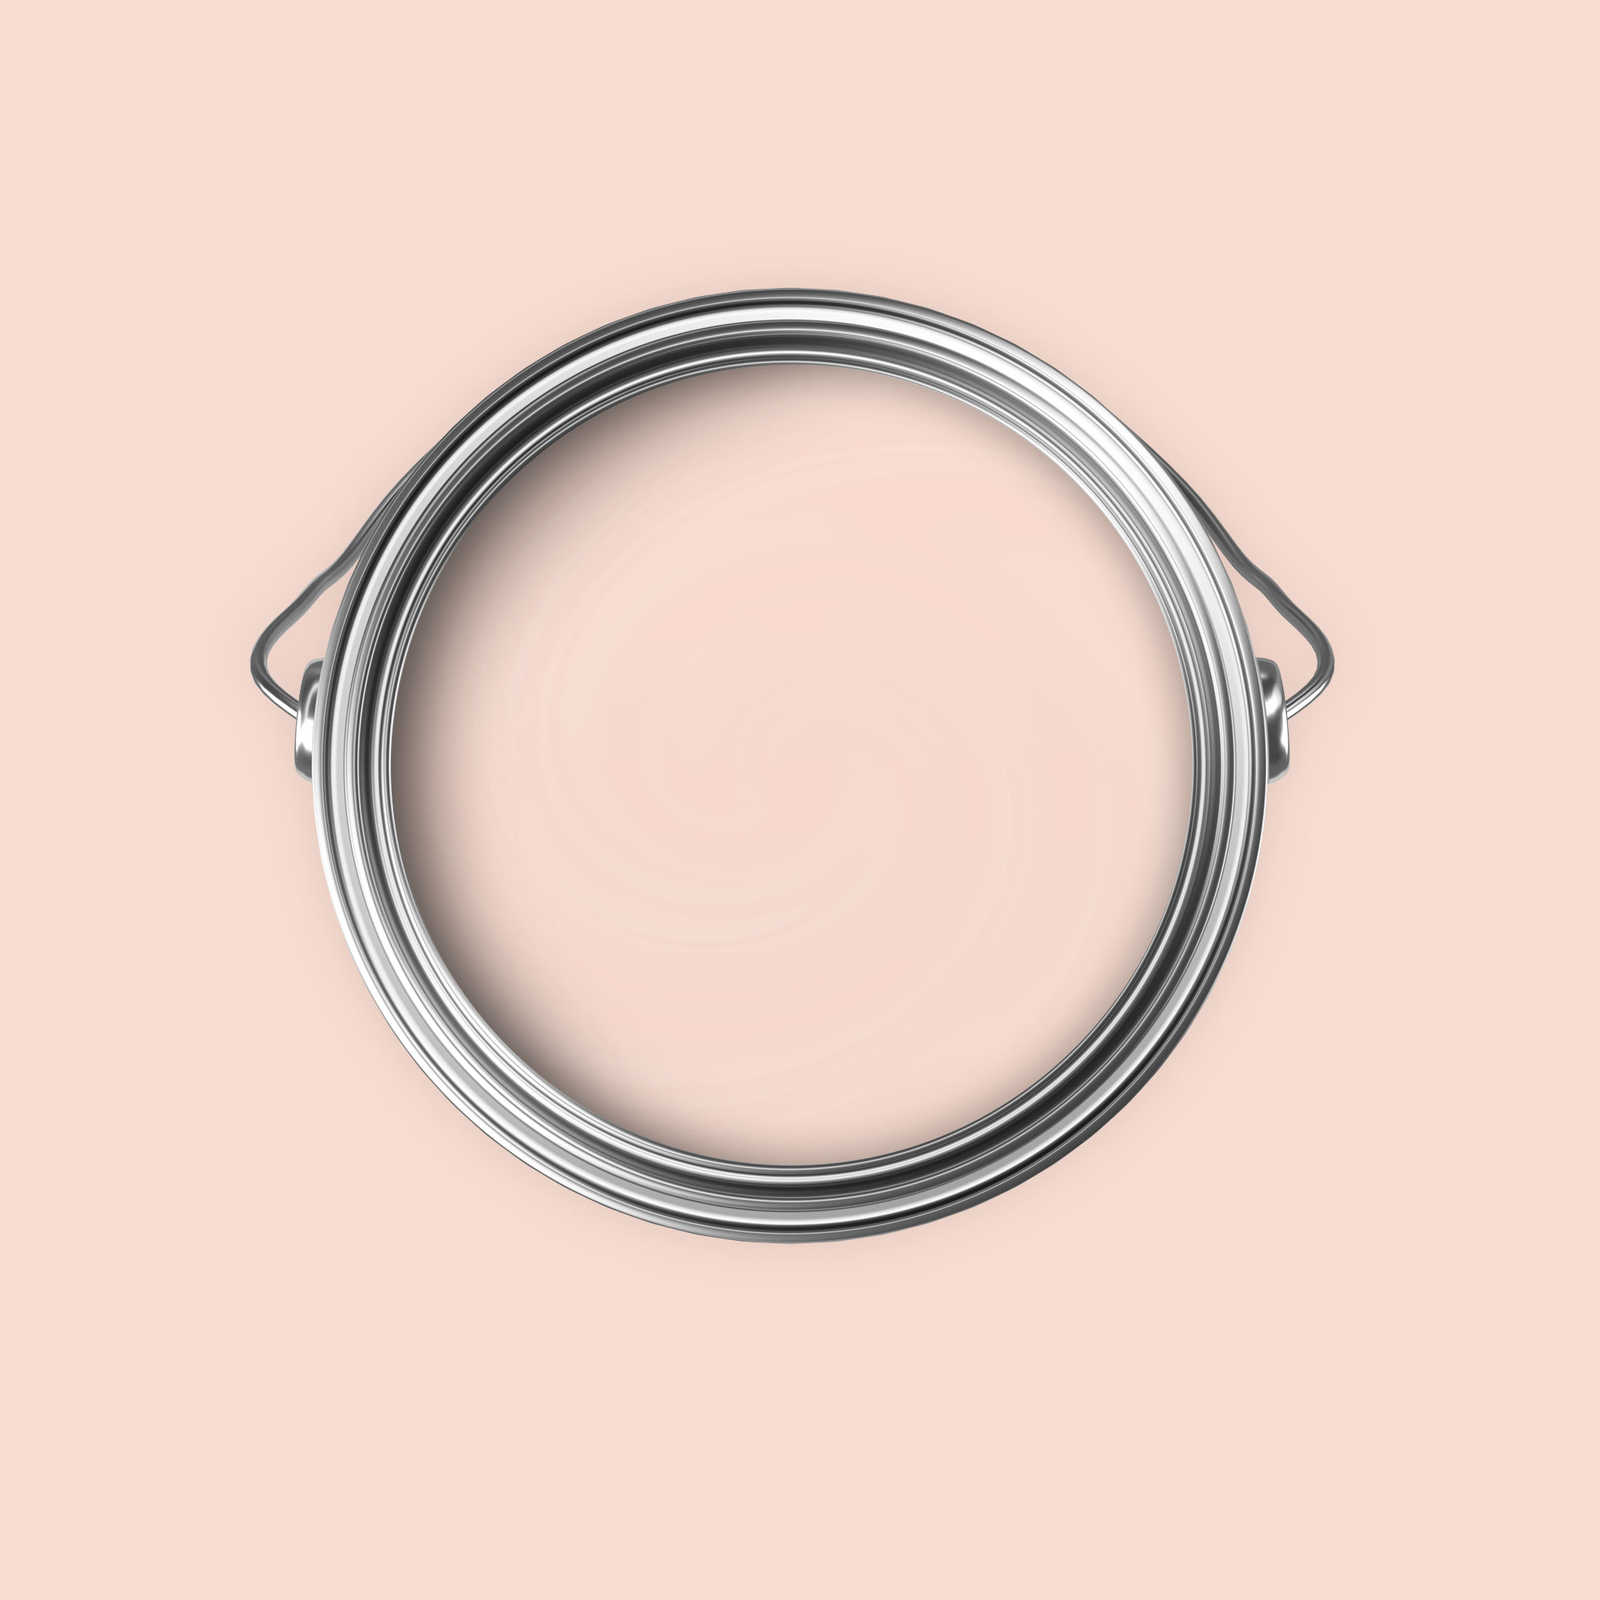             Premium Wandfarbe behagliches Rosa »Luxury Lipstick« NW1000 – 5 Liter
        